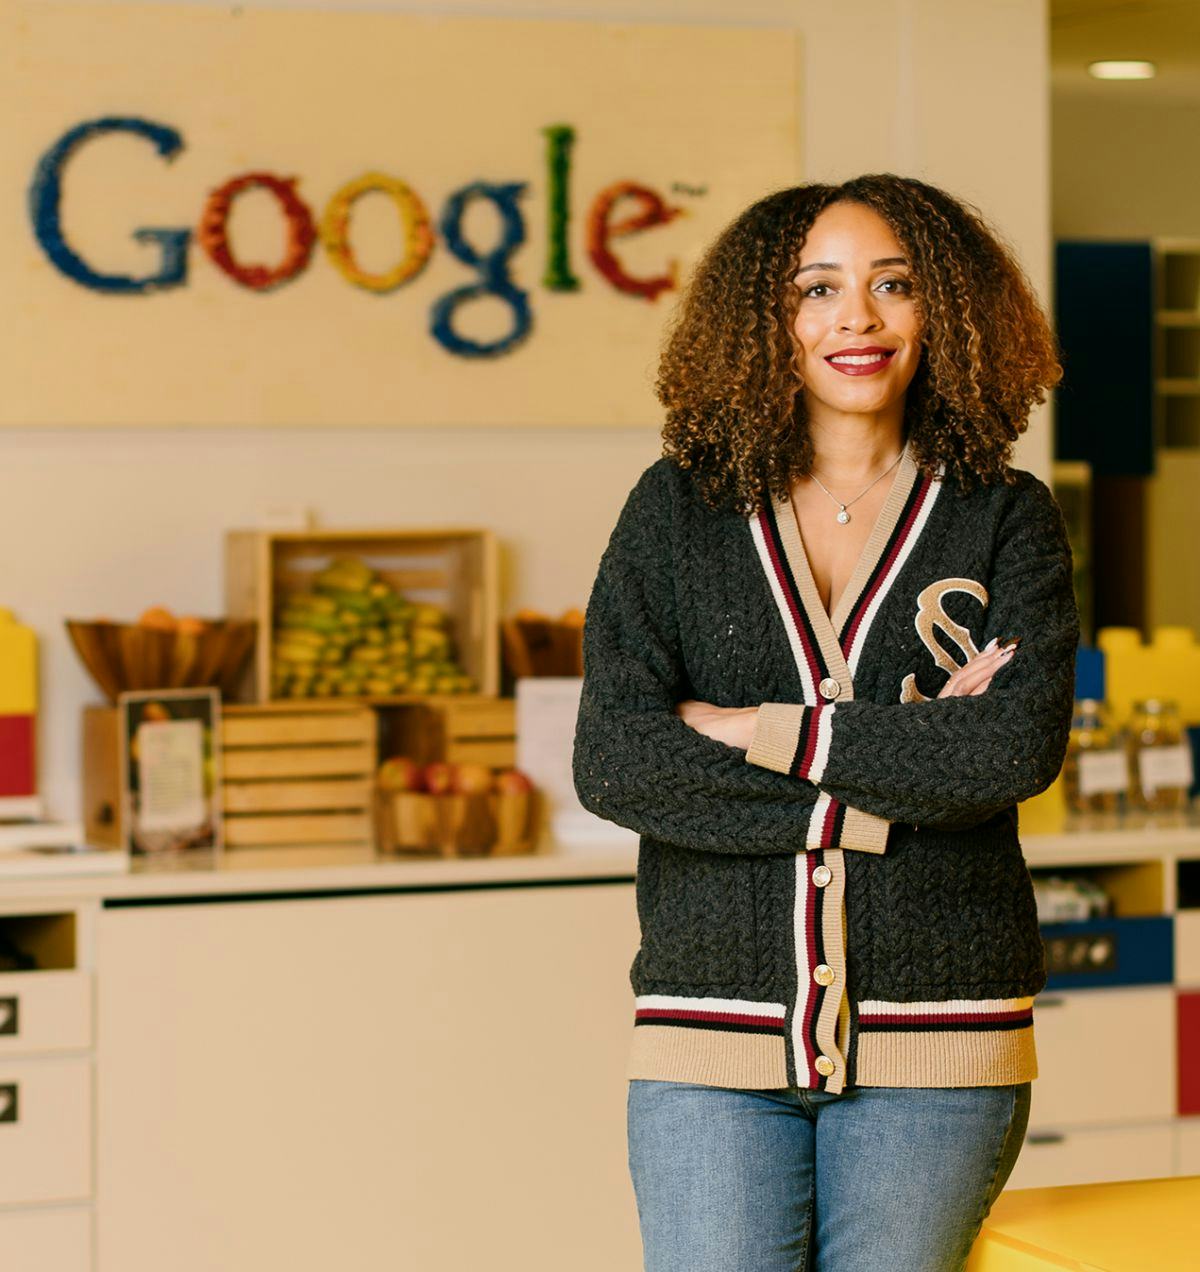 Portrait of Stephanie LeBlanc-Godfrey with Google sign in background.